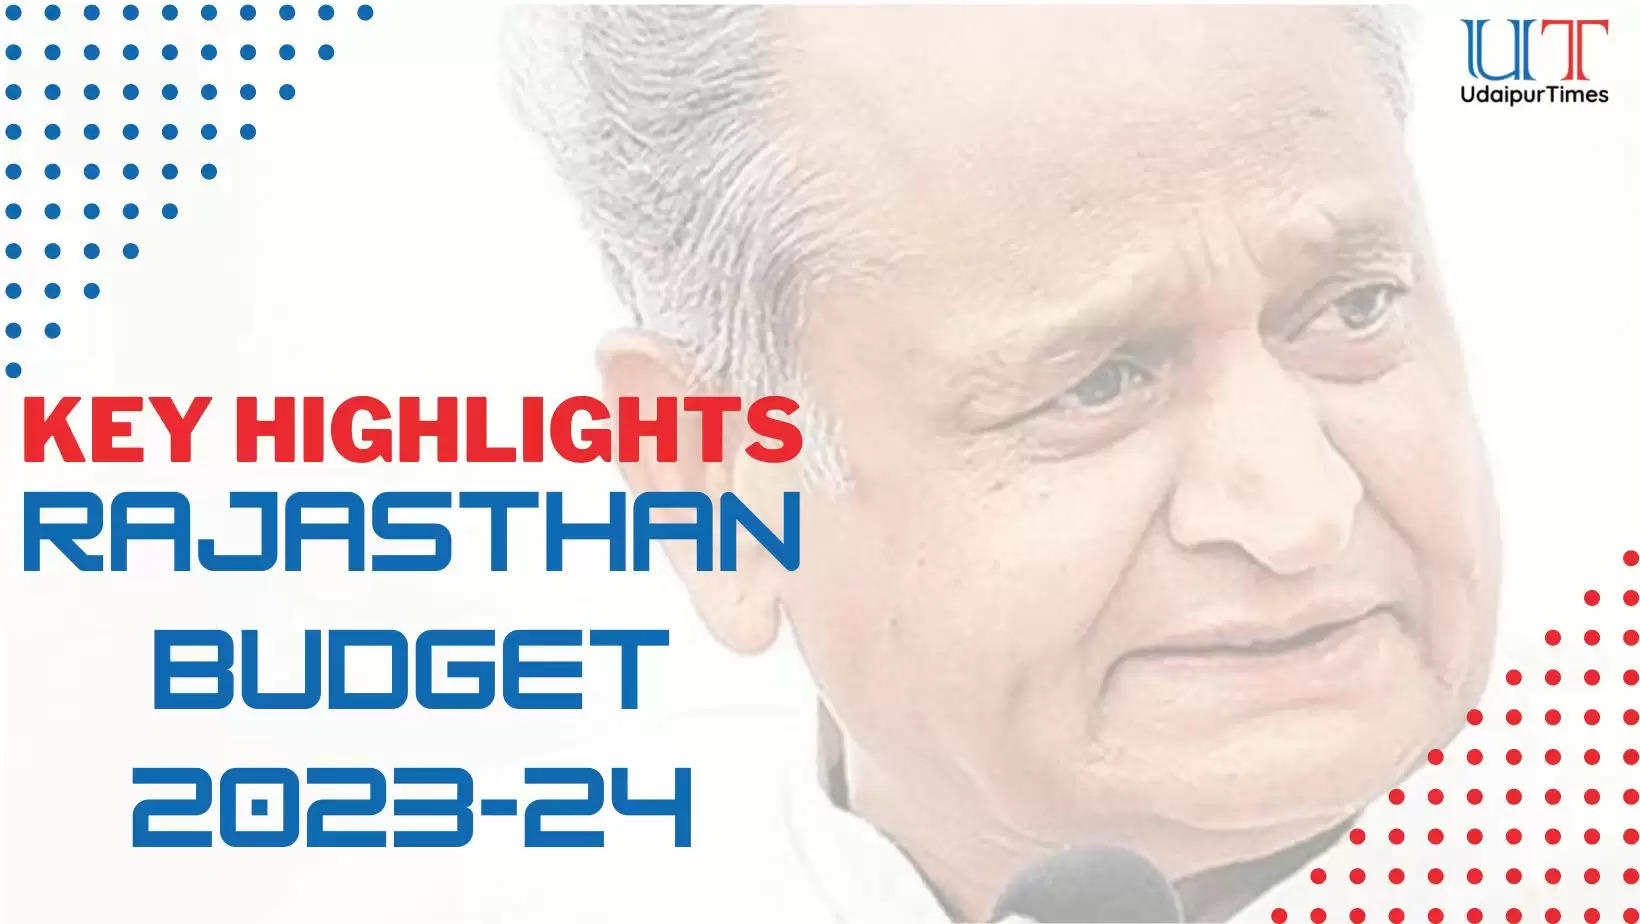 rajasthan Budget 2023-24 Key Highlights Ashok Gehlot Election Year Budget